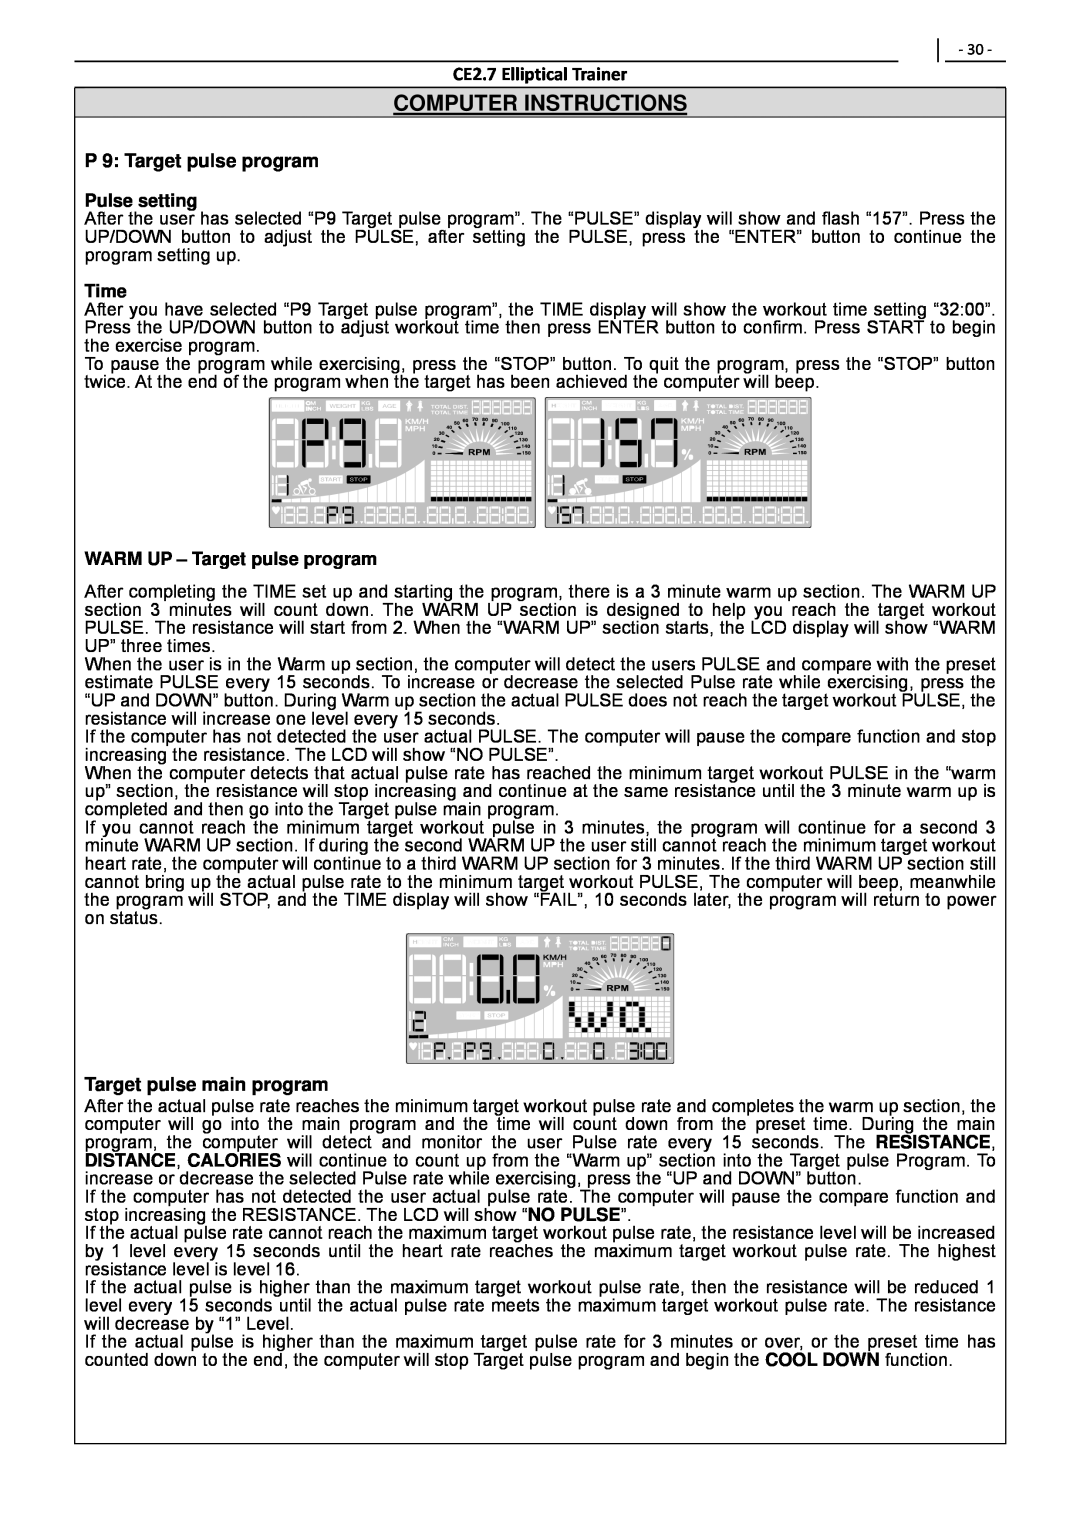 Polar P 9 Target pulse program, Target pulse main program, Computer Instructions, CE2.7 Elliptical Trainer, Time 